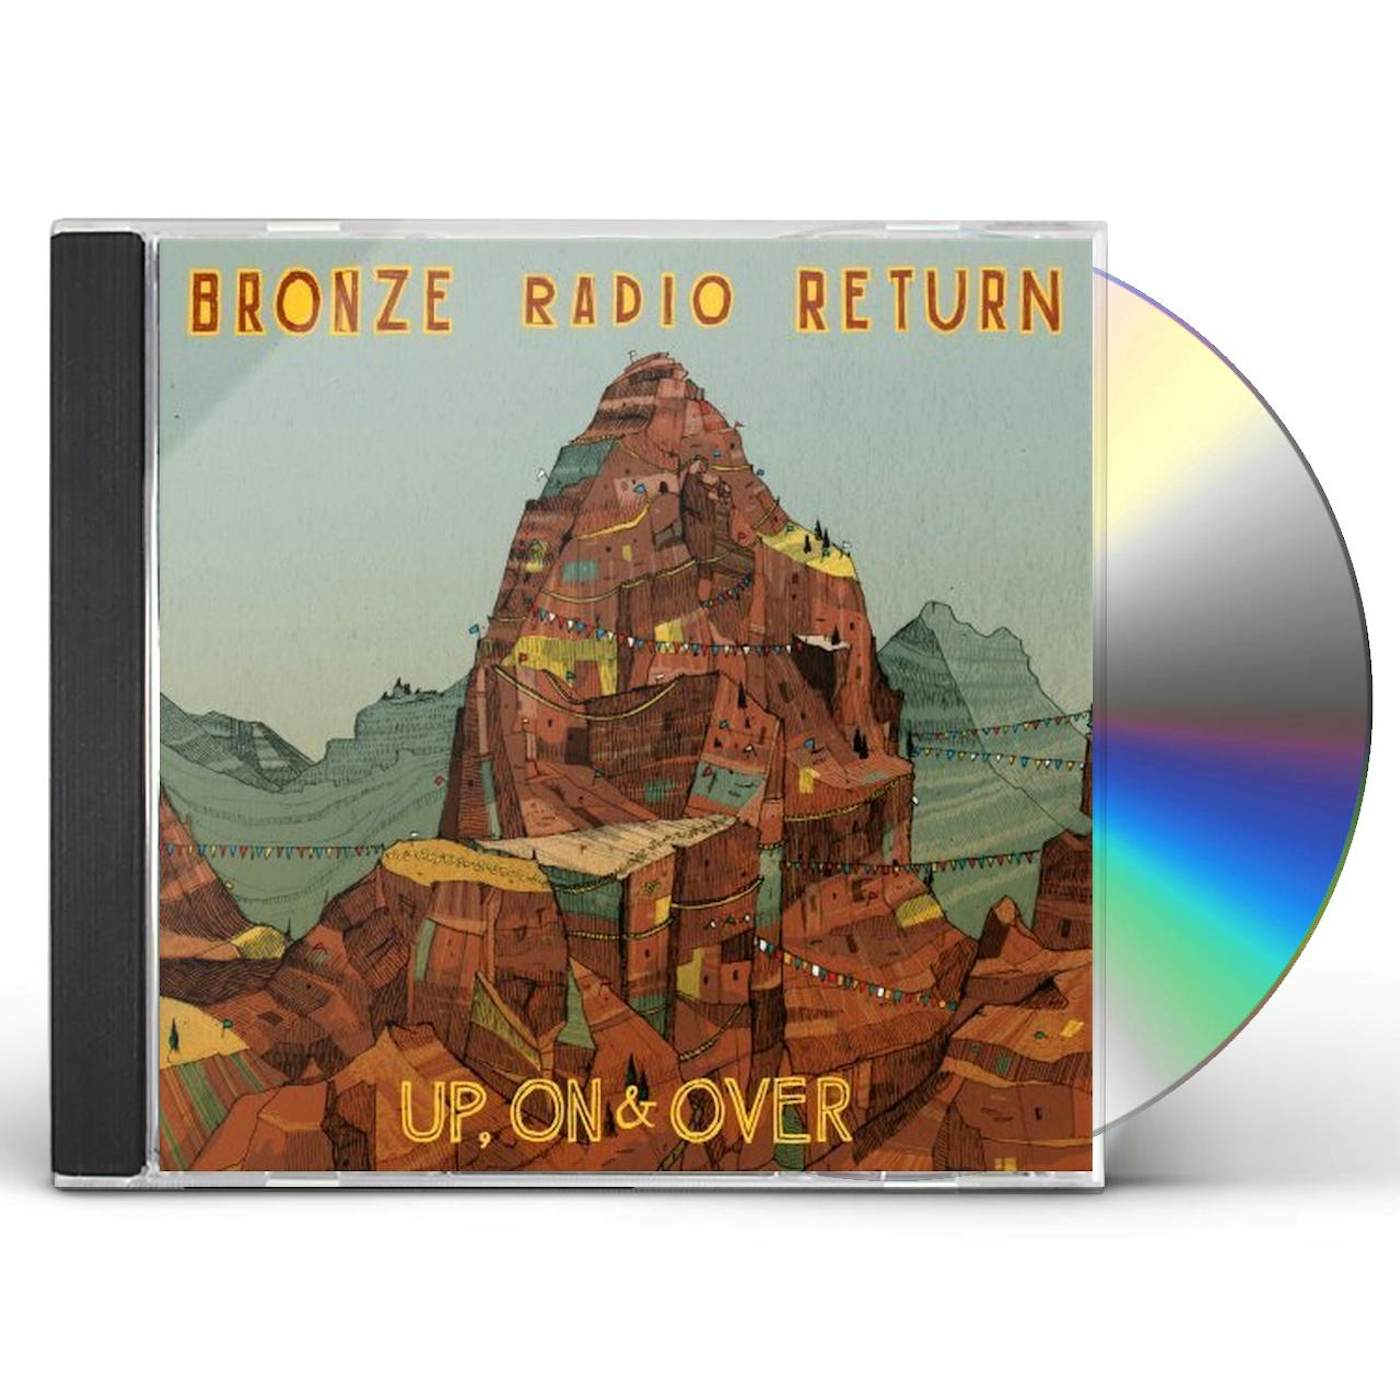 Bronze Radio Return UP ON & OVER CD